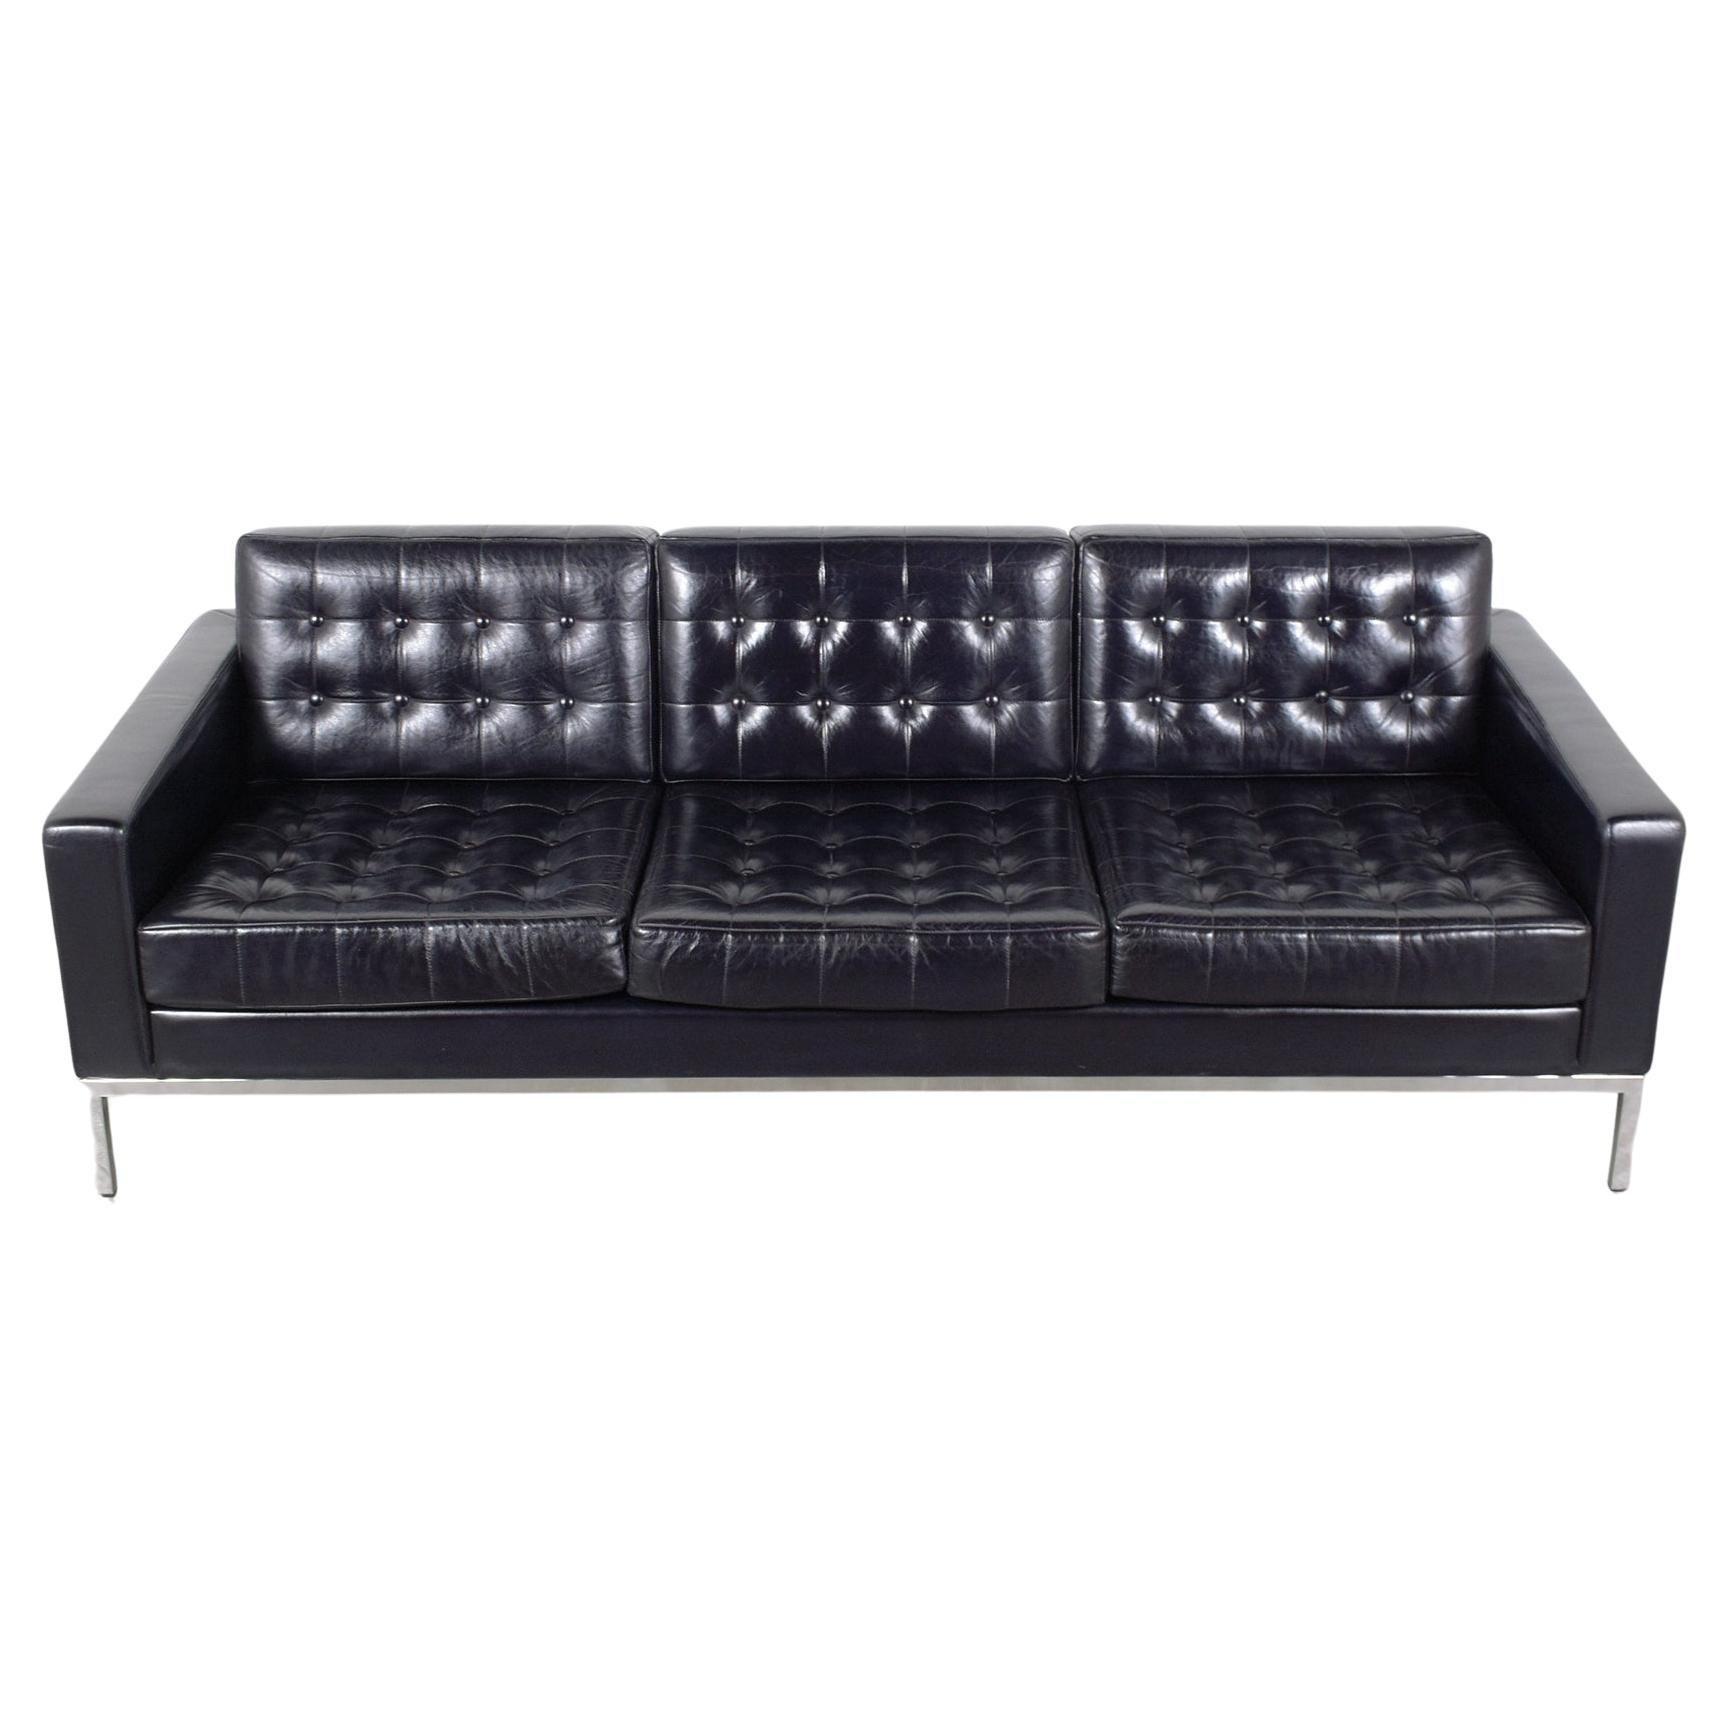 1980s Vintage Leather Sofa: Timeless Mid-Century Elegance Restored For Sale